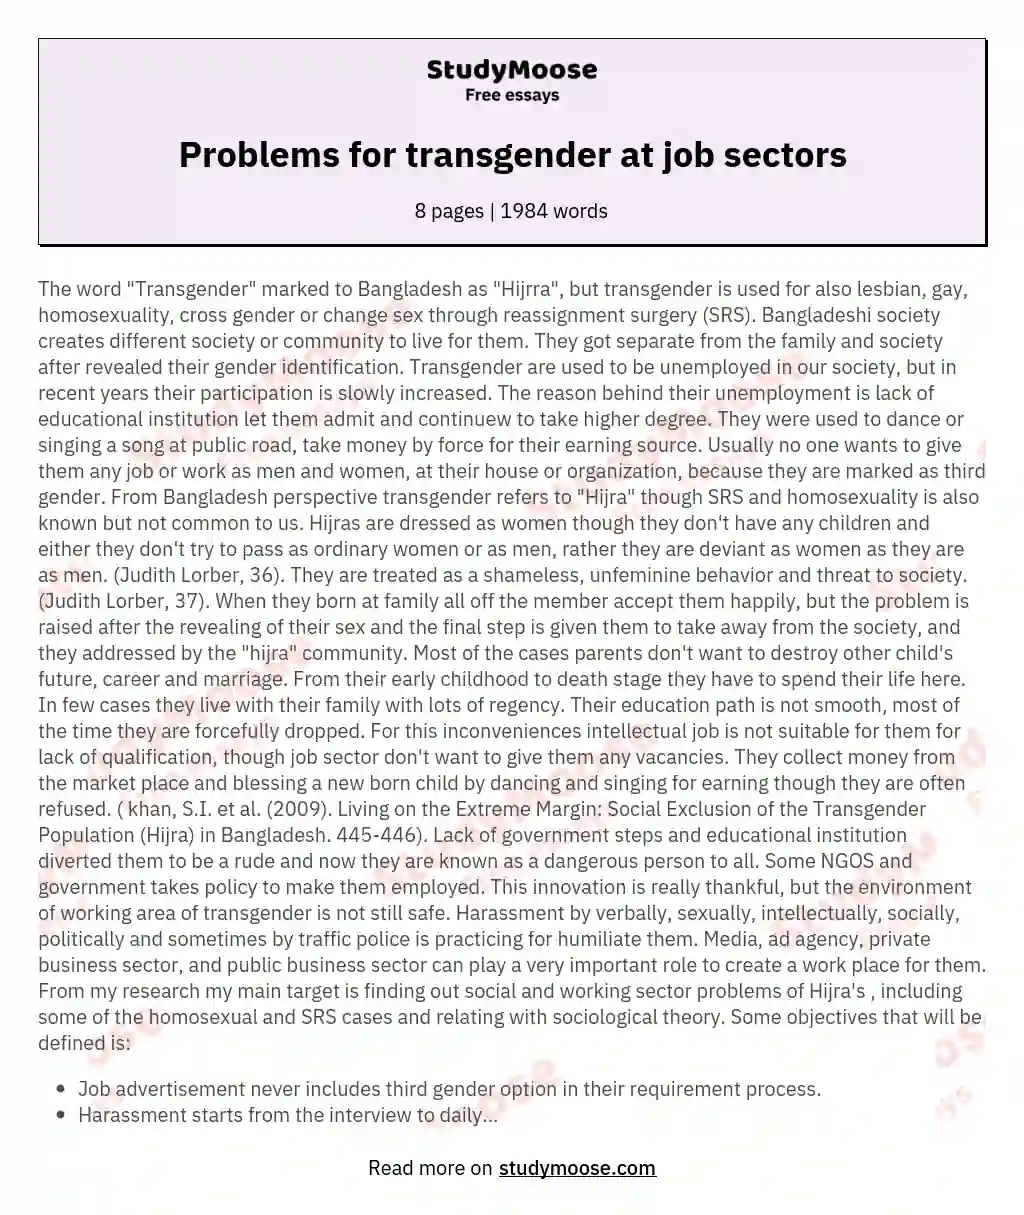 Problems for transgender at job sectors